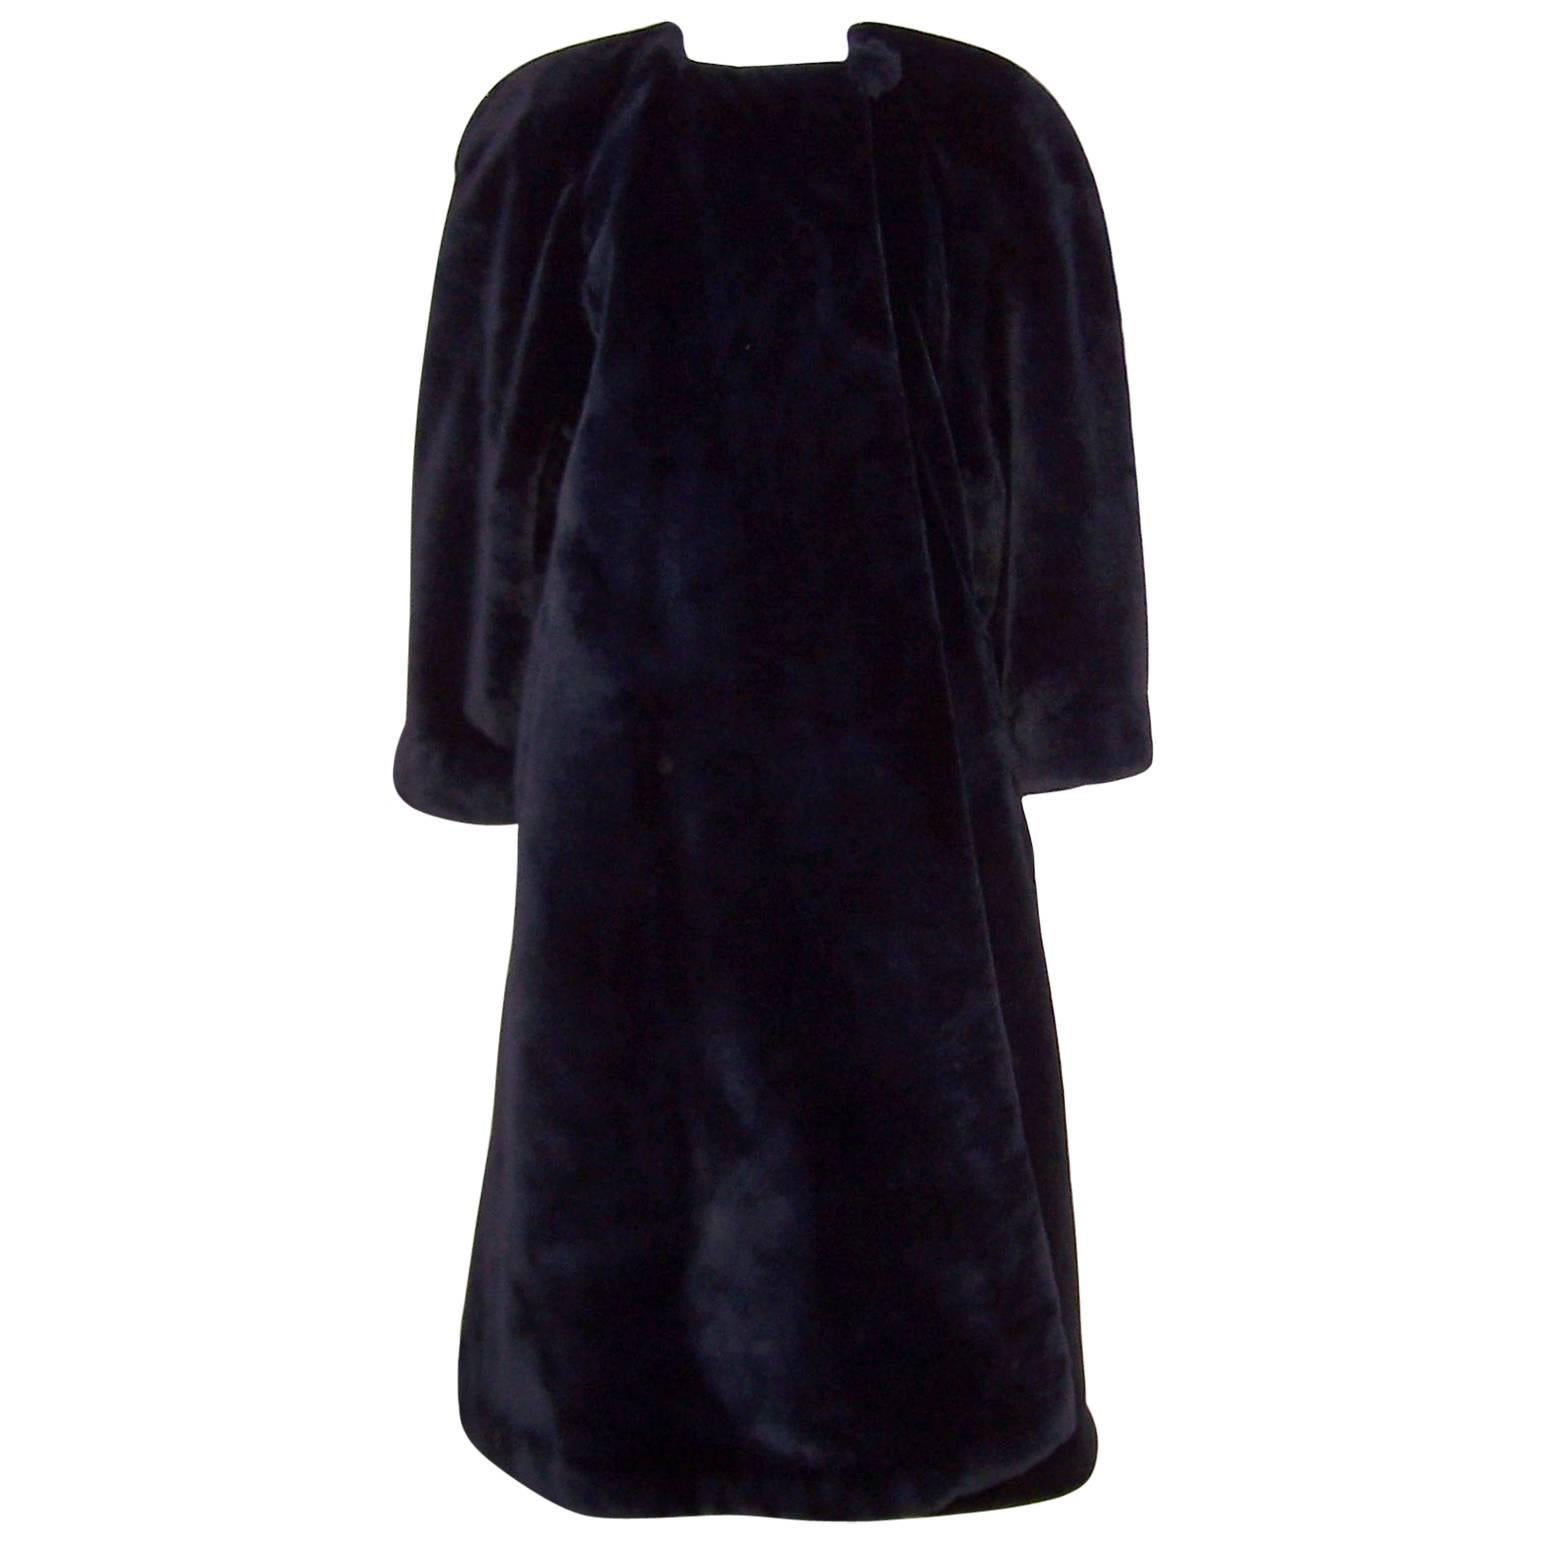 Fabulous 1980's Sonia Rykiel Black Faux Fur Coat